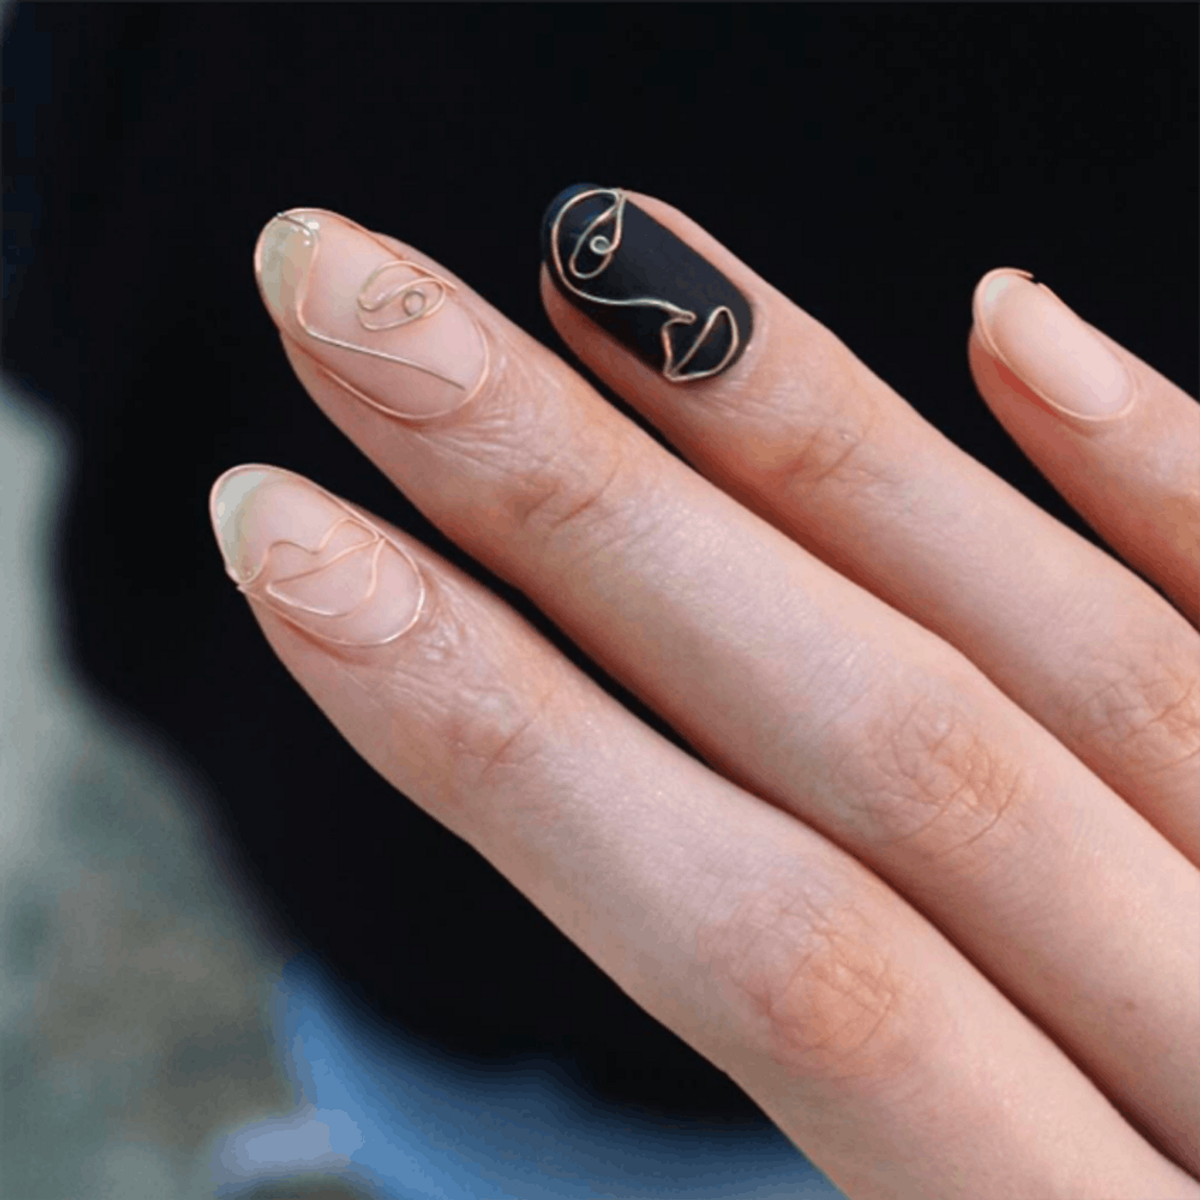 Wire Nails Are Here to Make Your Minimalist Mani Dreams Come True